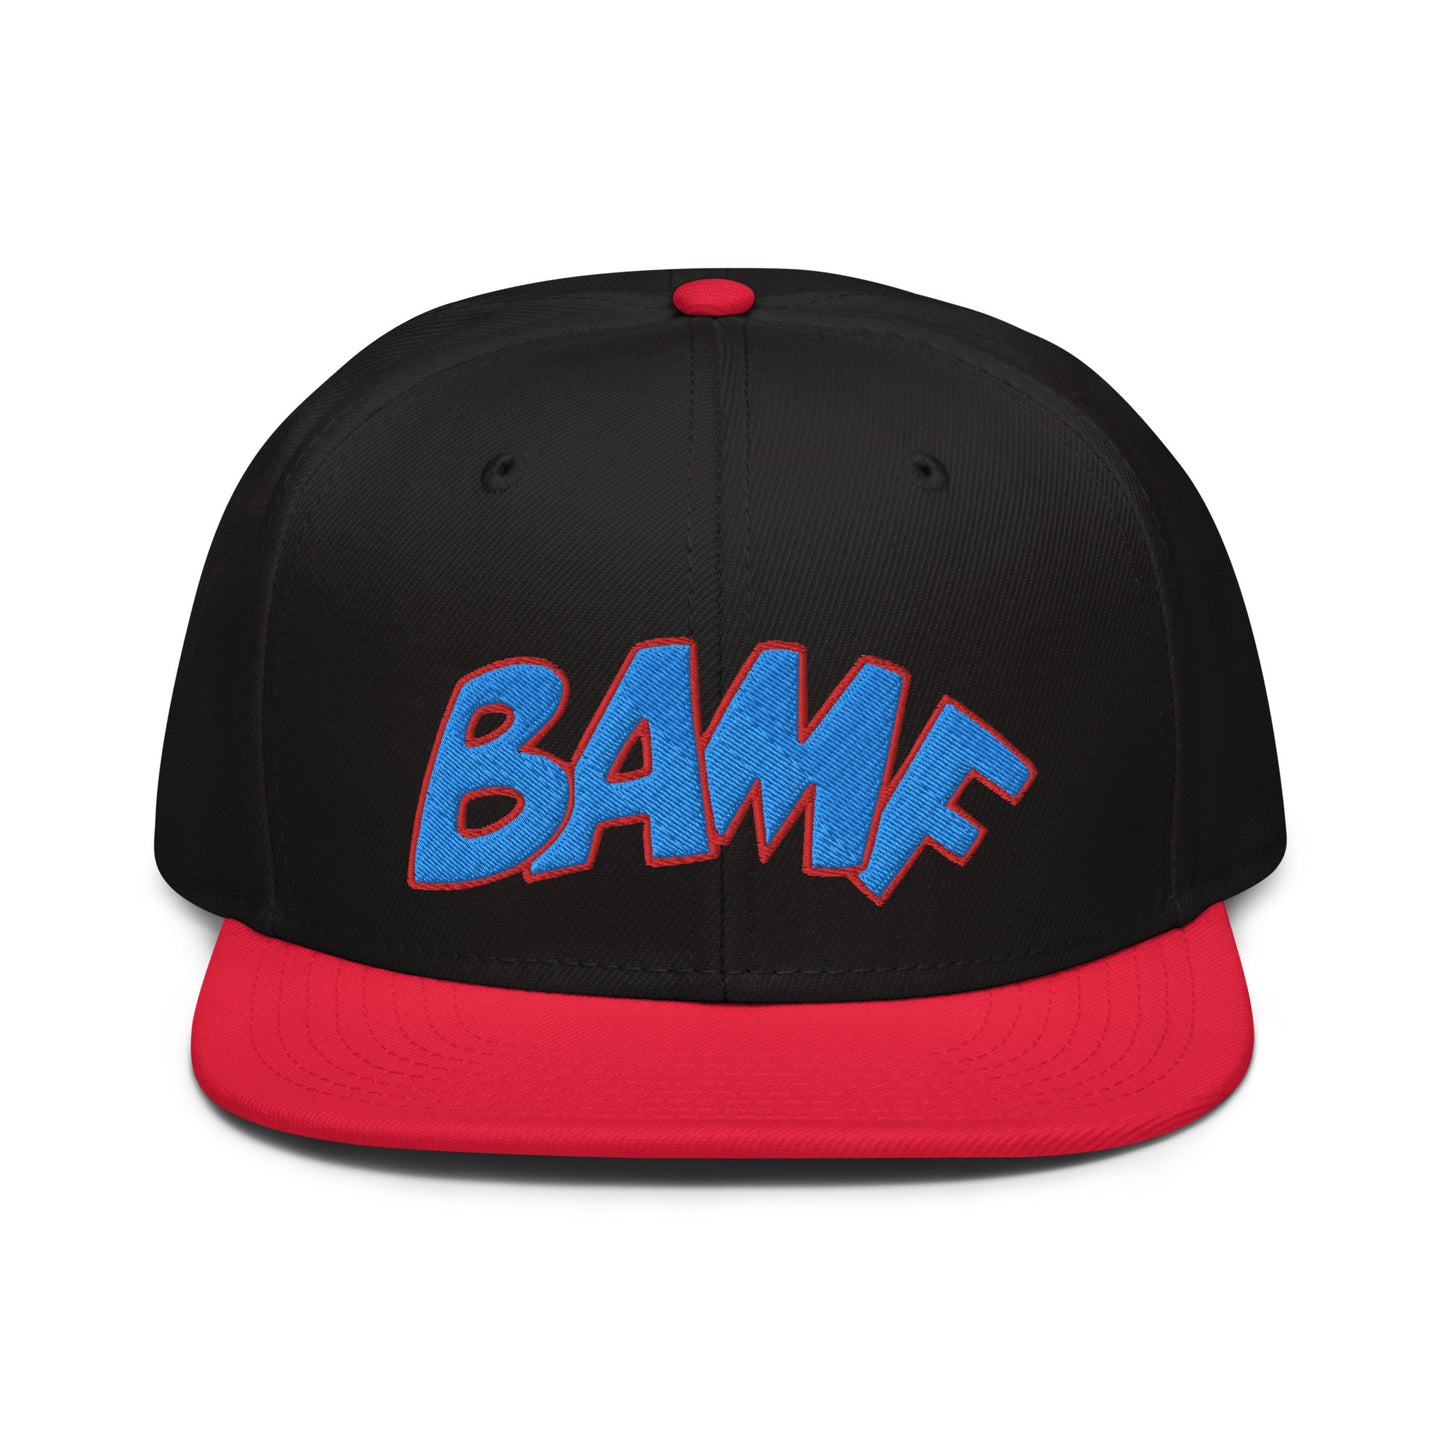 BAMF snapback hat